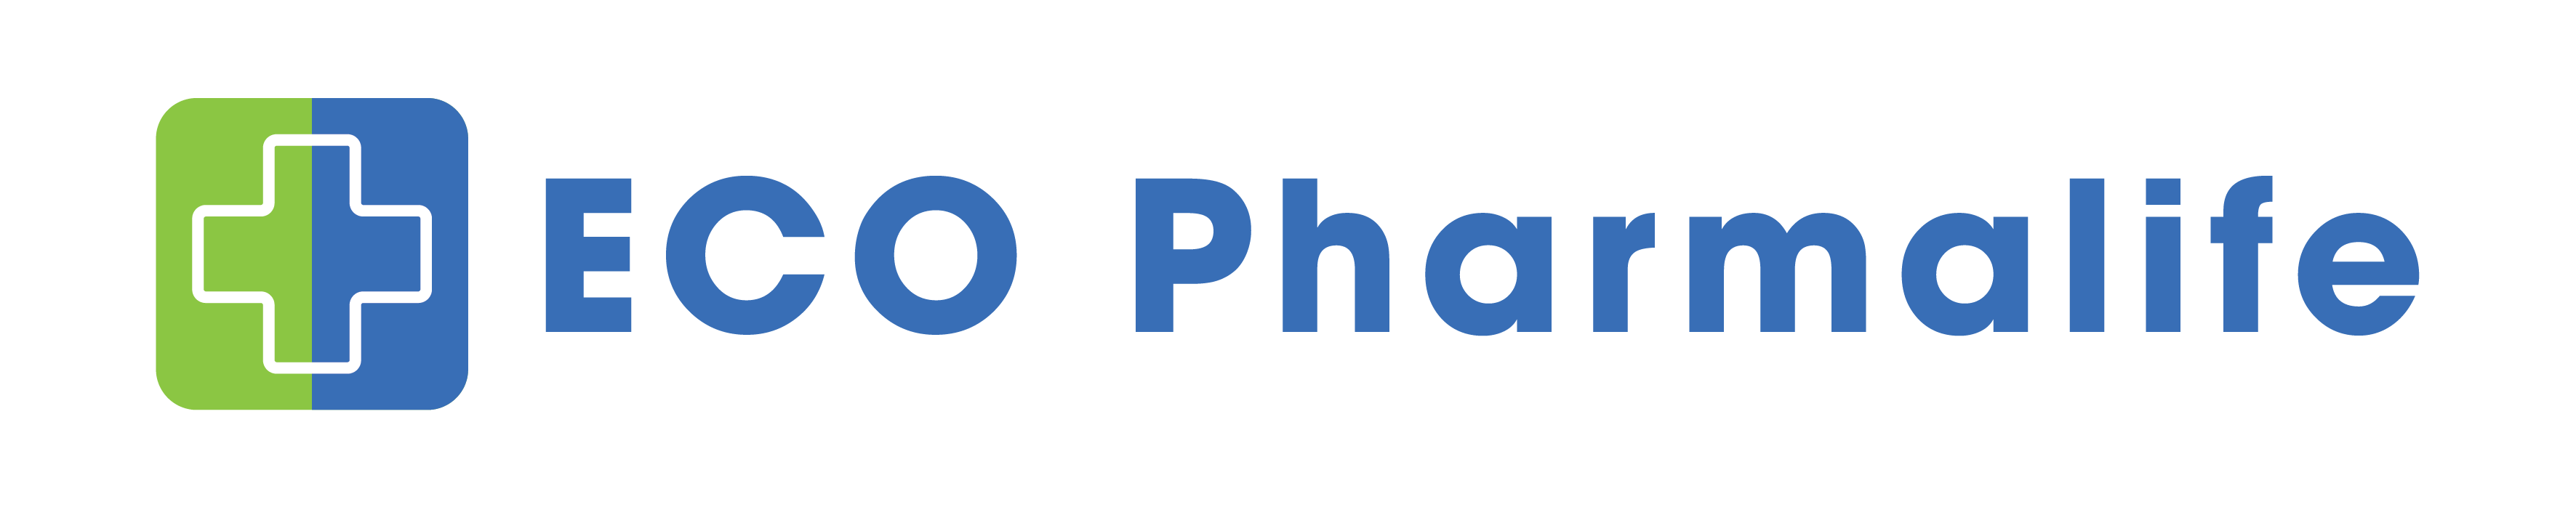 Eco Pharmalife's profile banner